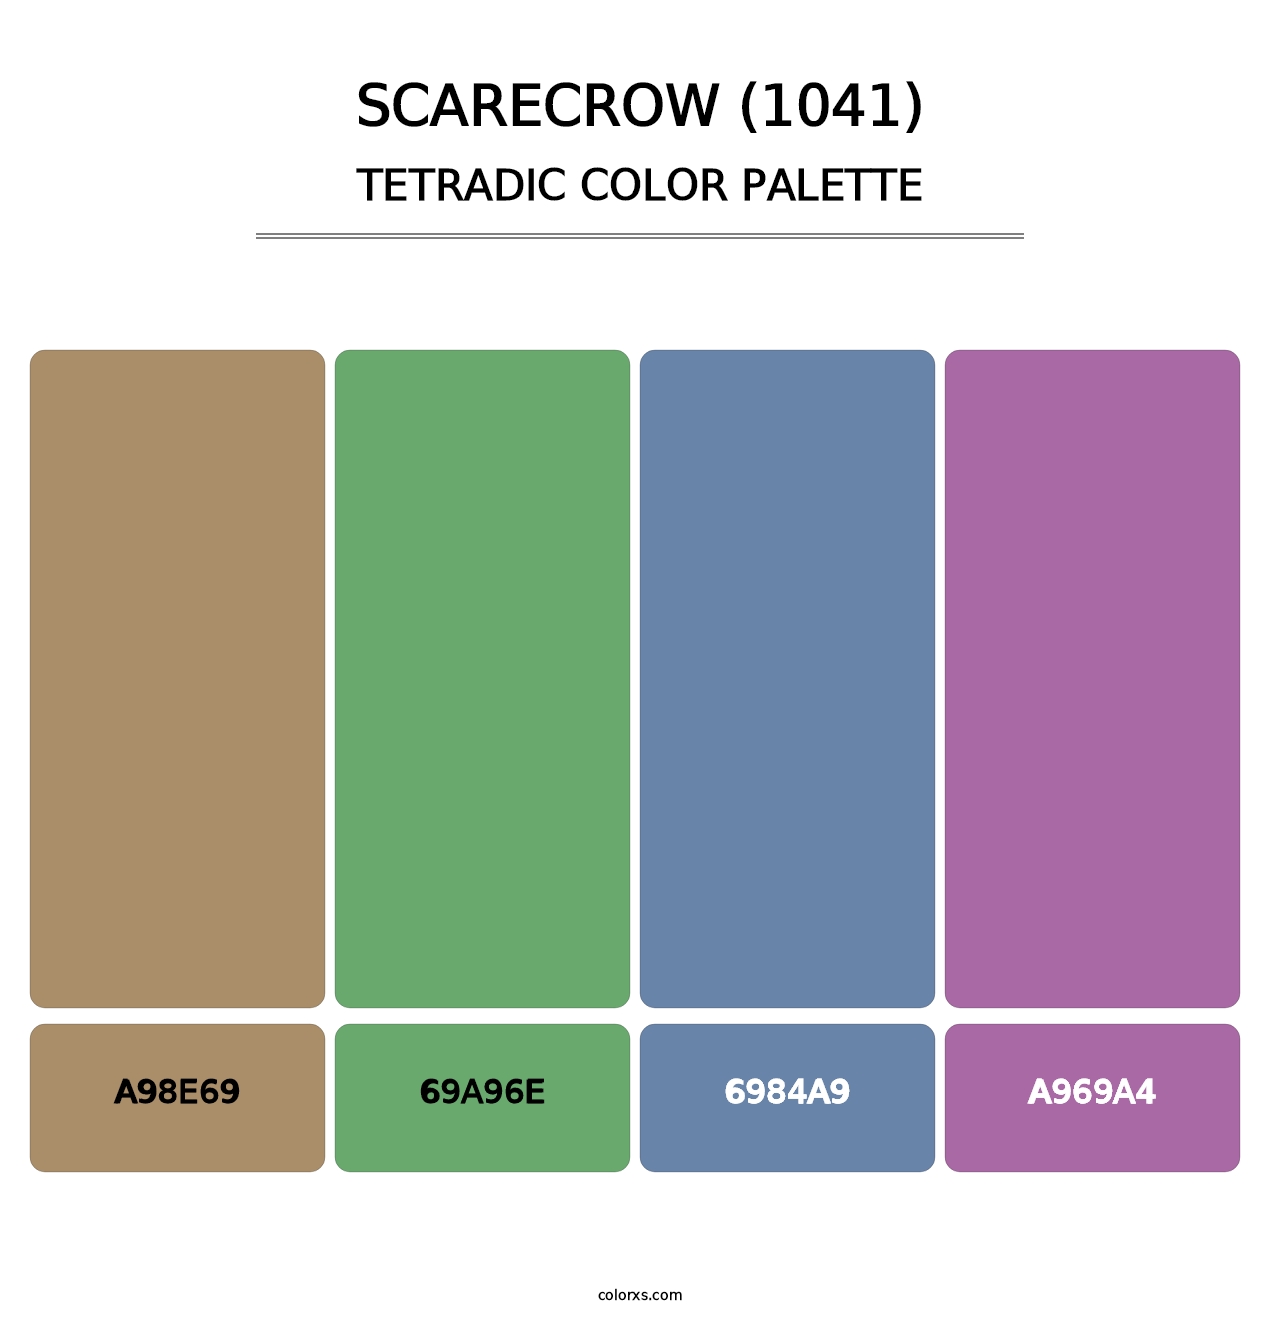 Scarecrow (1041) - Tetradic Color Palette